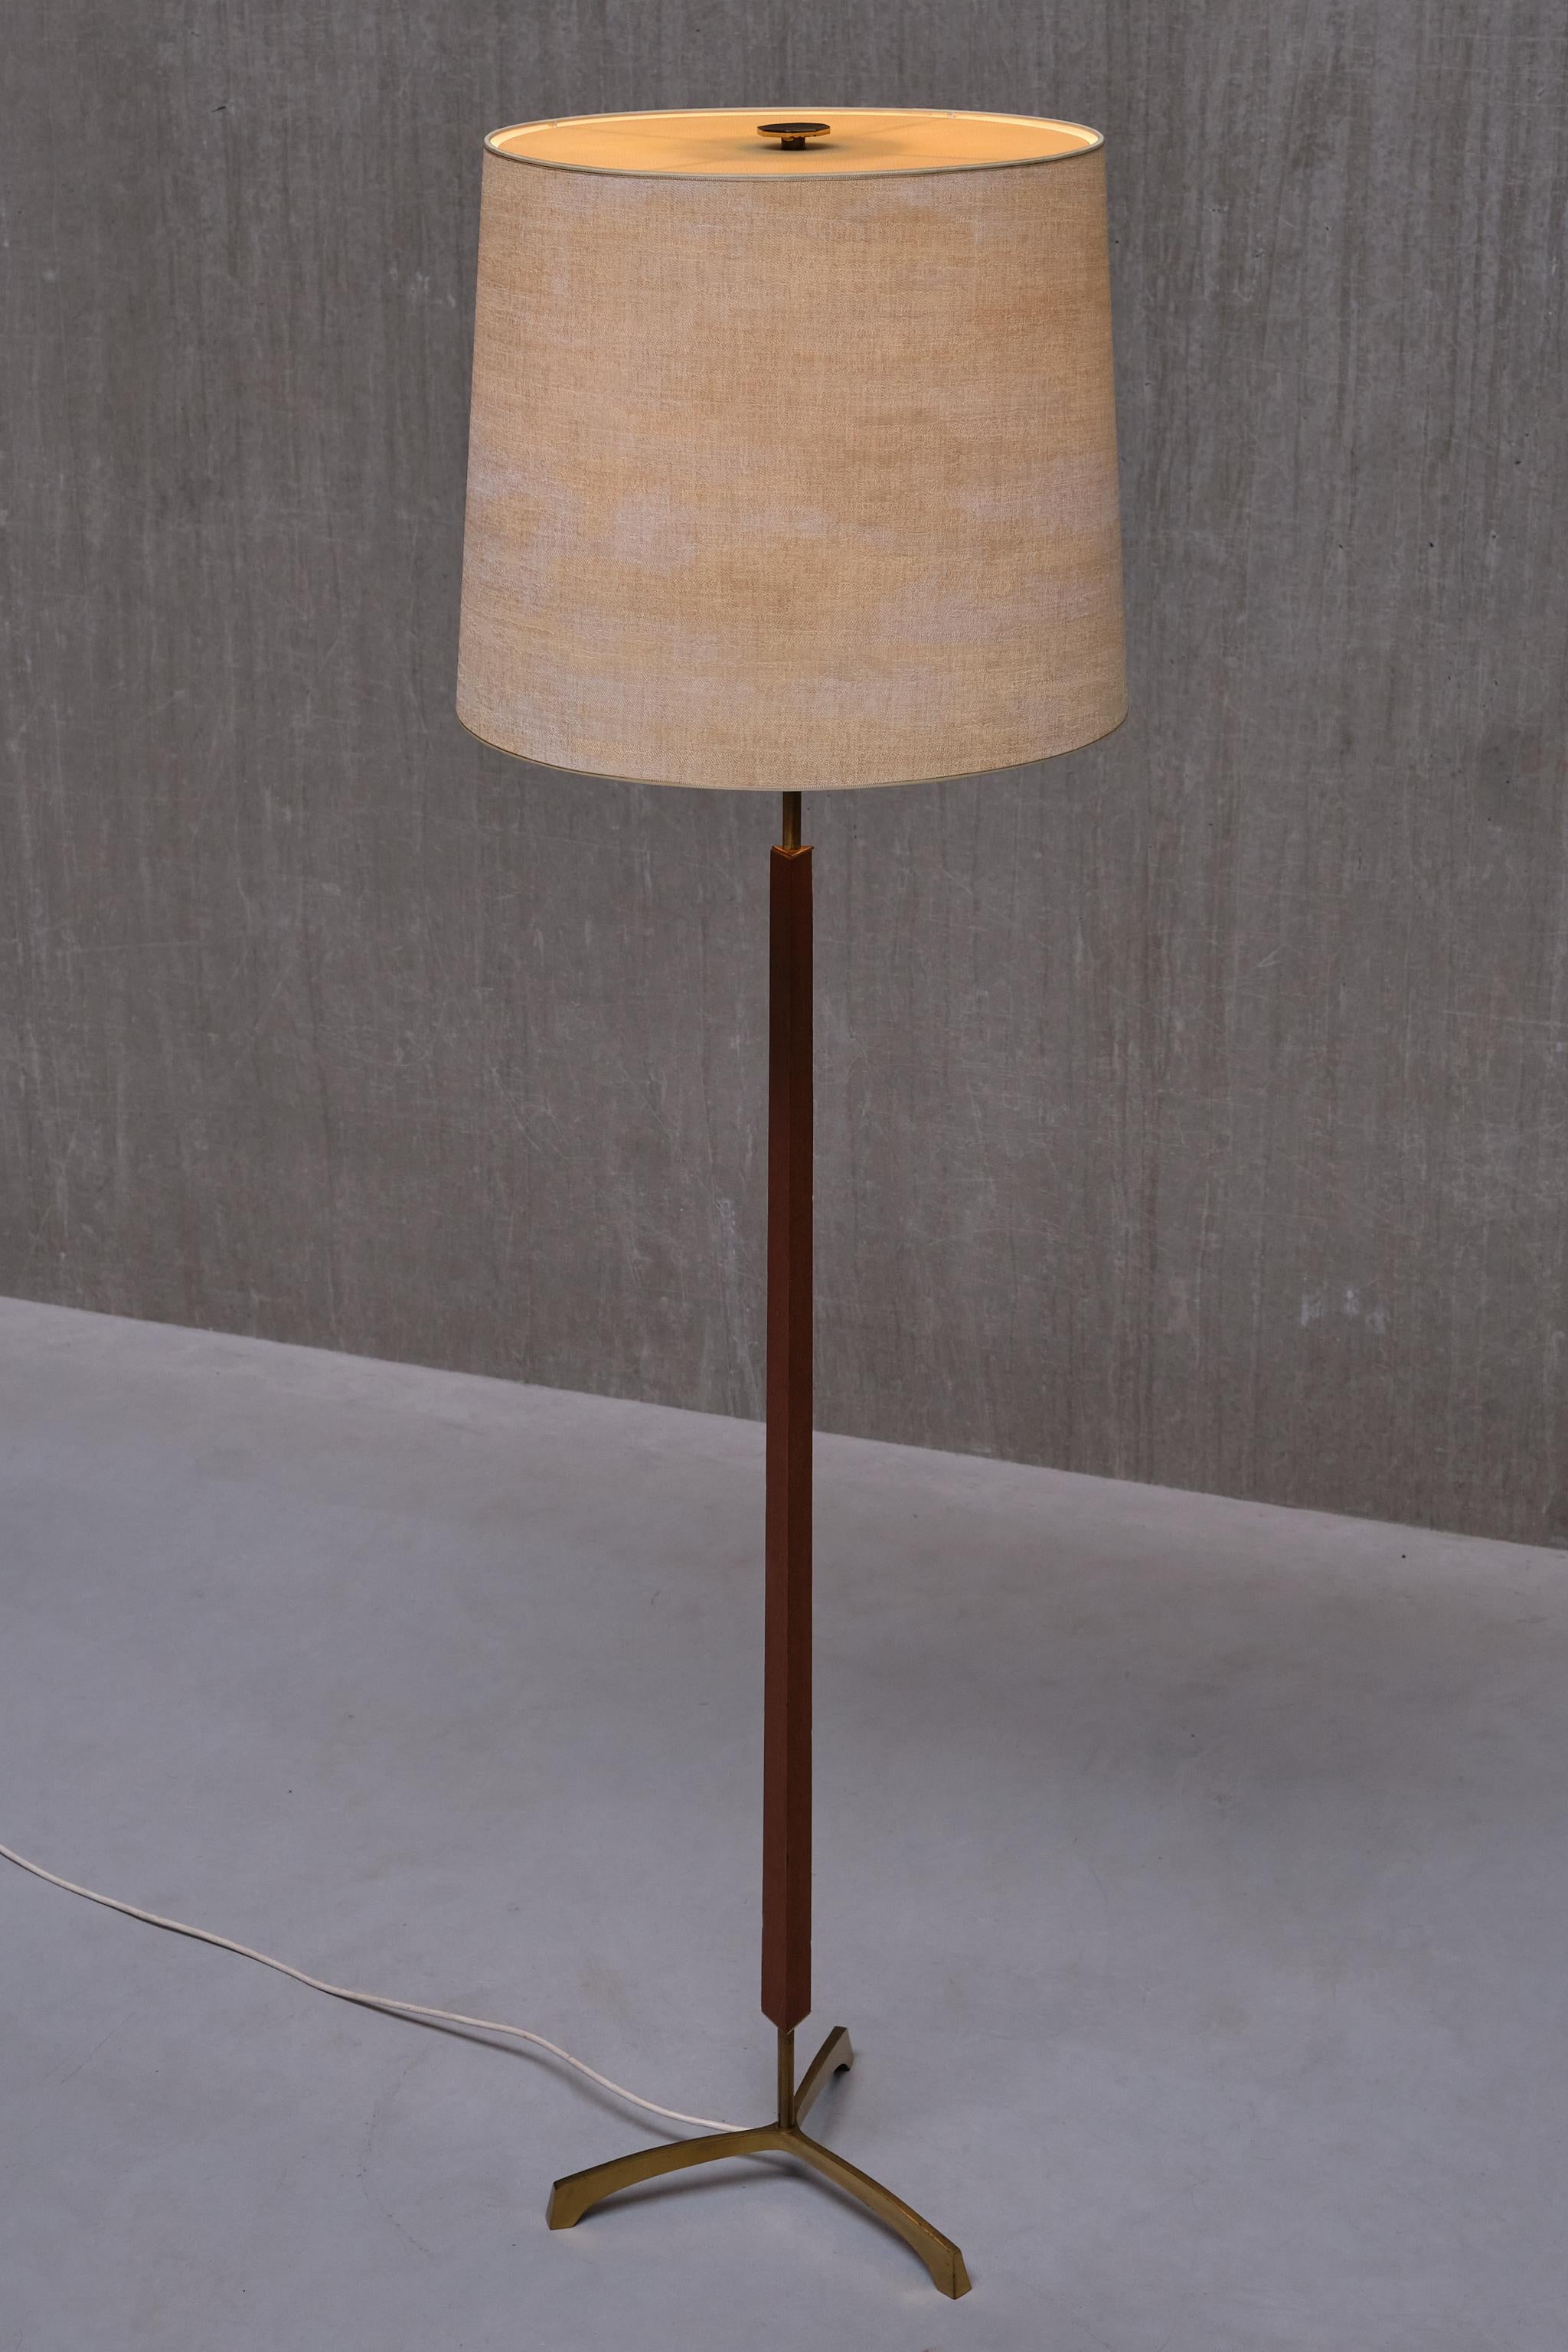 Danish Modern Three Legged Floor Lamp in Brass, Teak and Textured Shade, 1950s For Sale 3